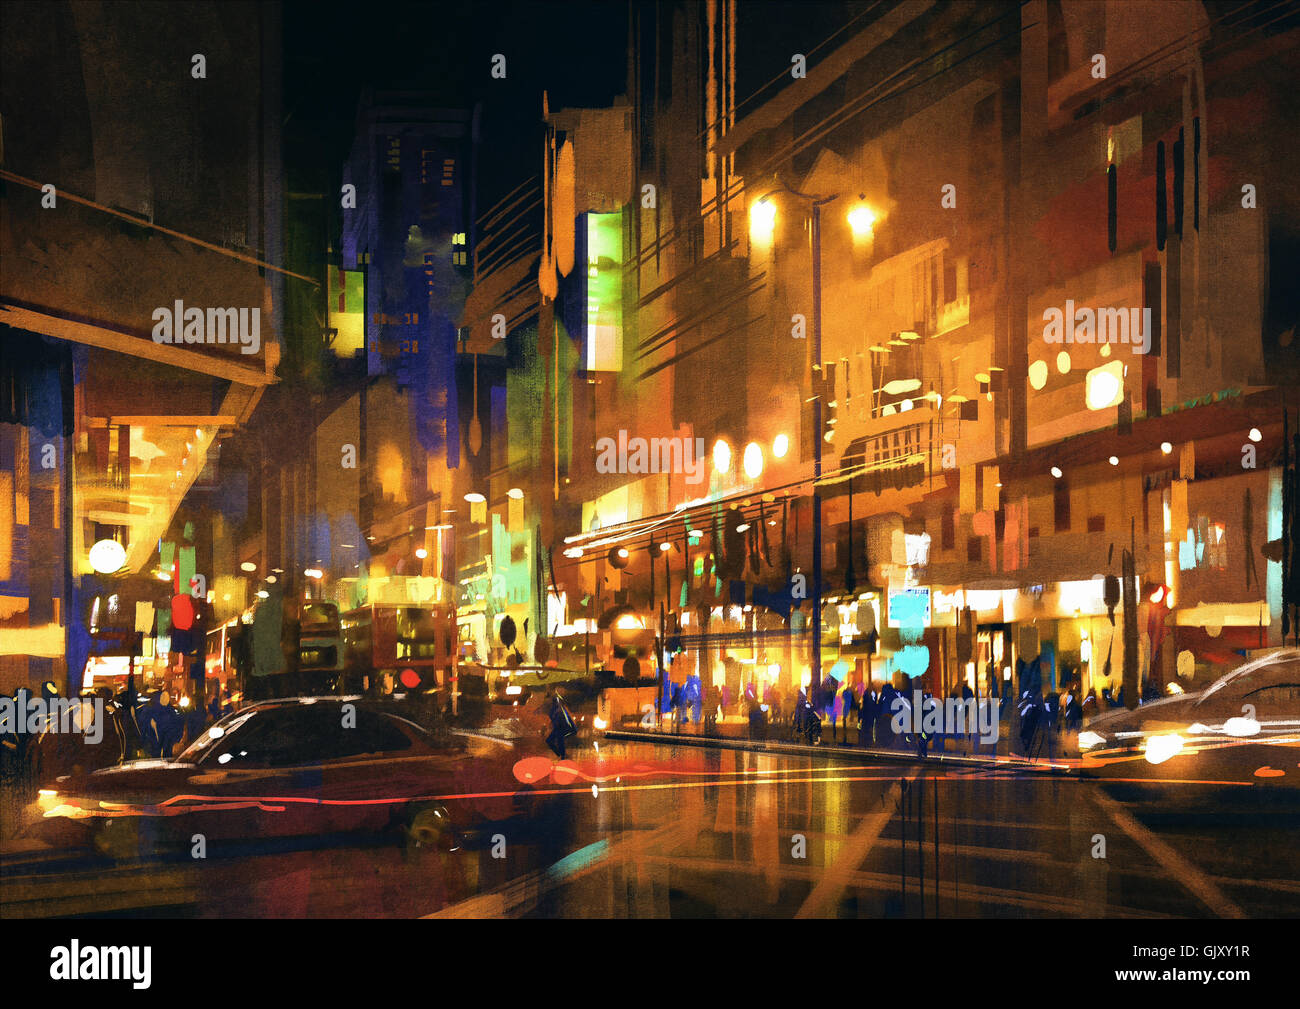 Strada di città di notte con luci colorate,immagine,pittura digitale Foto Stock